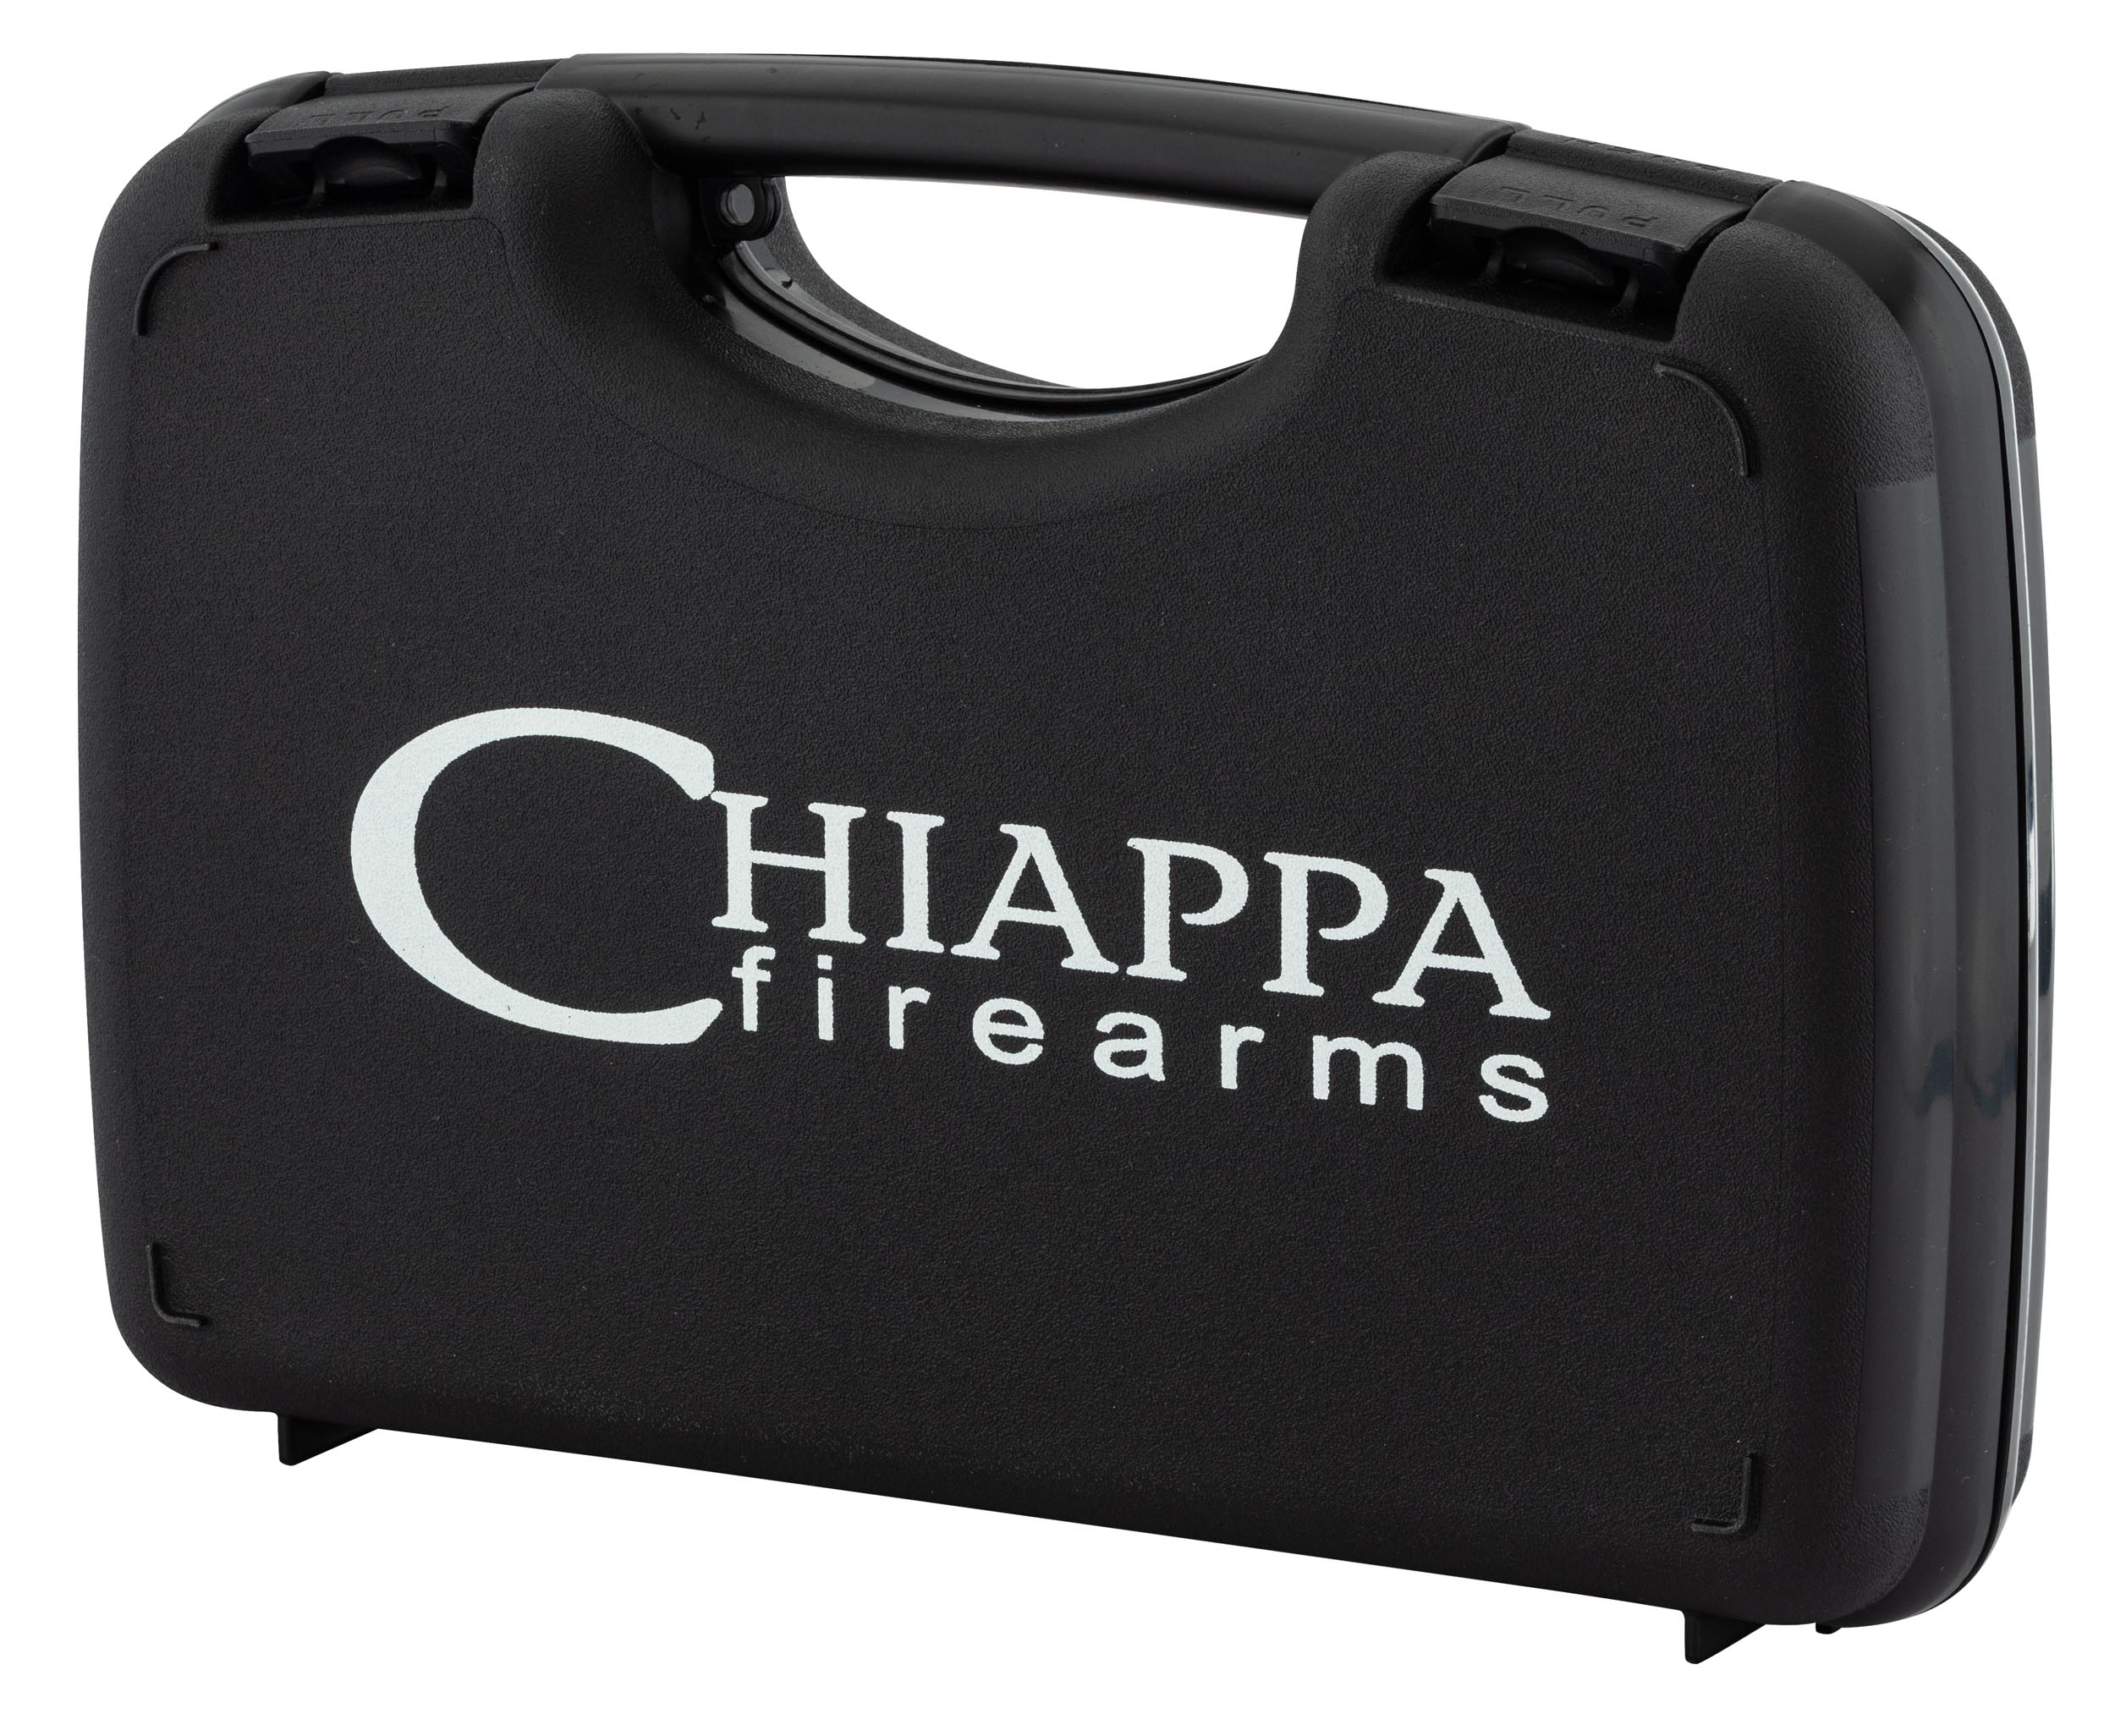 Photo Réplique Airgun revolver CO2 CHIAPPA RHINO Edition Gold 4,5mm